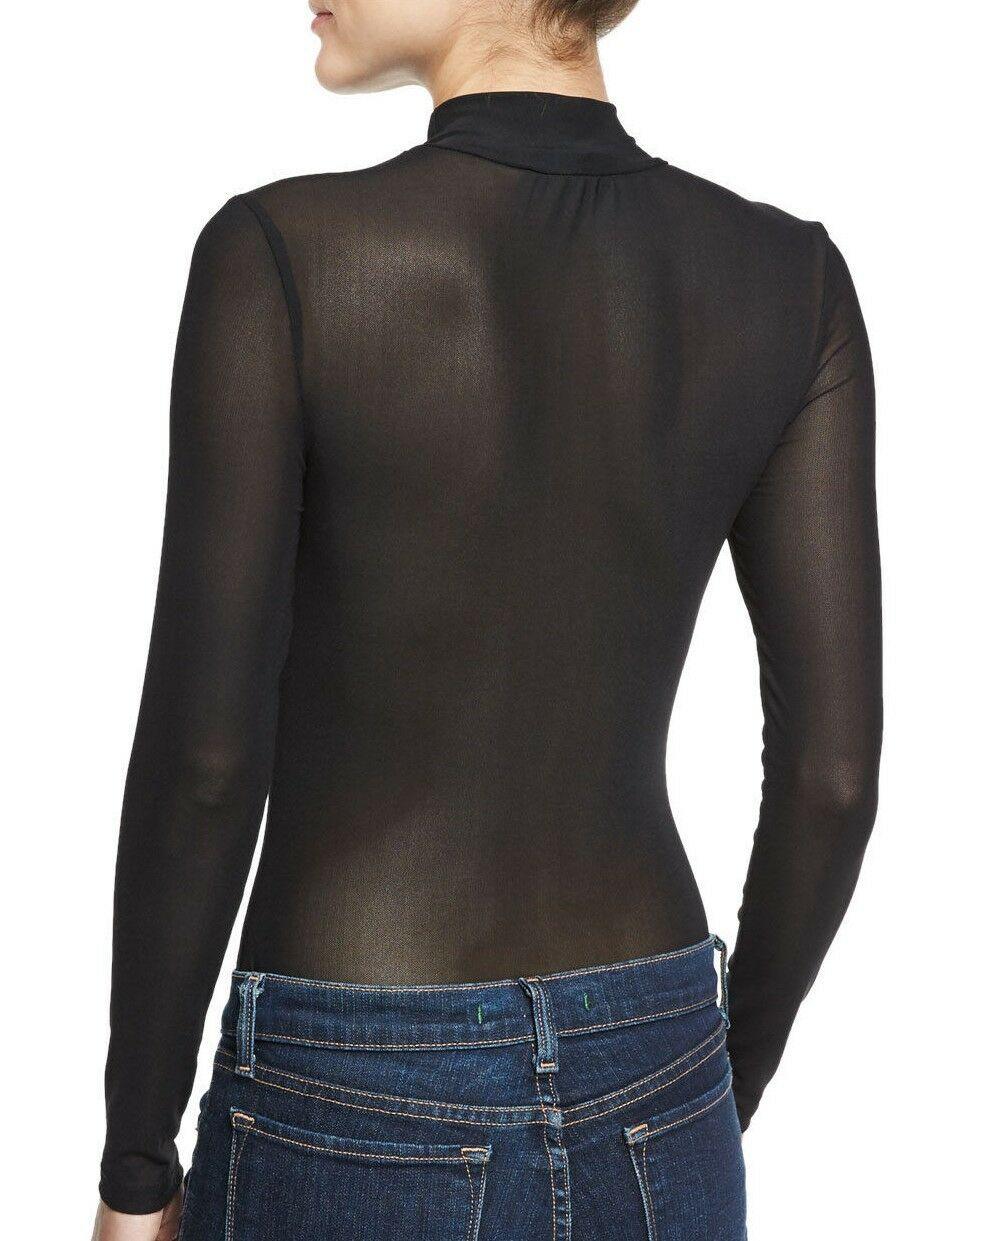 Romeo & Juliet Couture Long-Sleeve Mesh Bodysuit, Black Size M - SVNYFancy